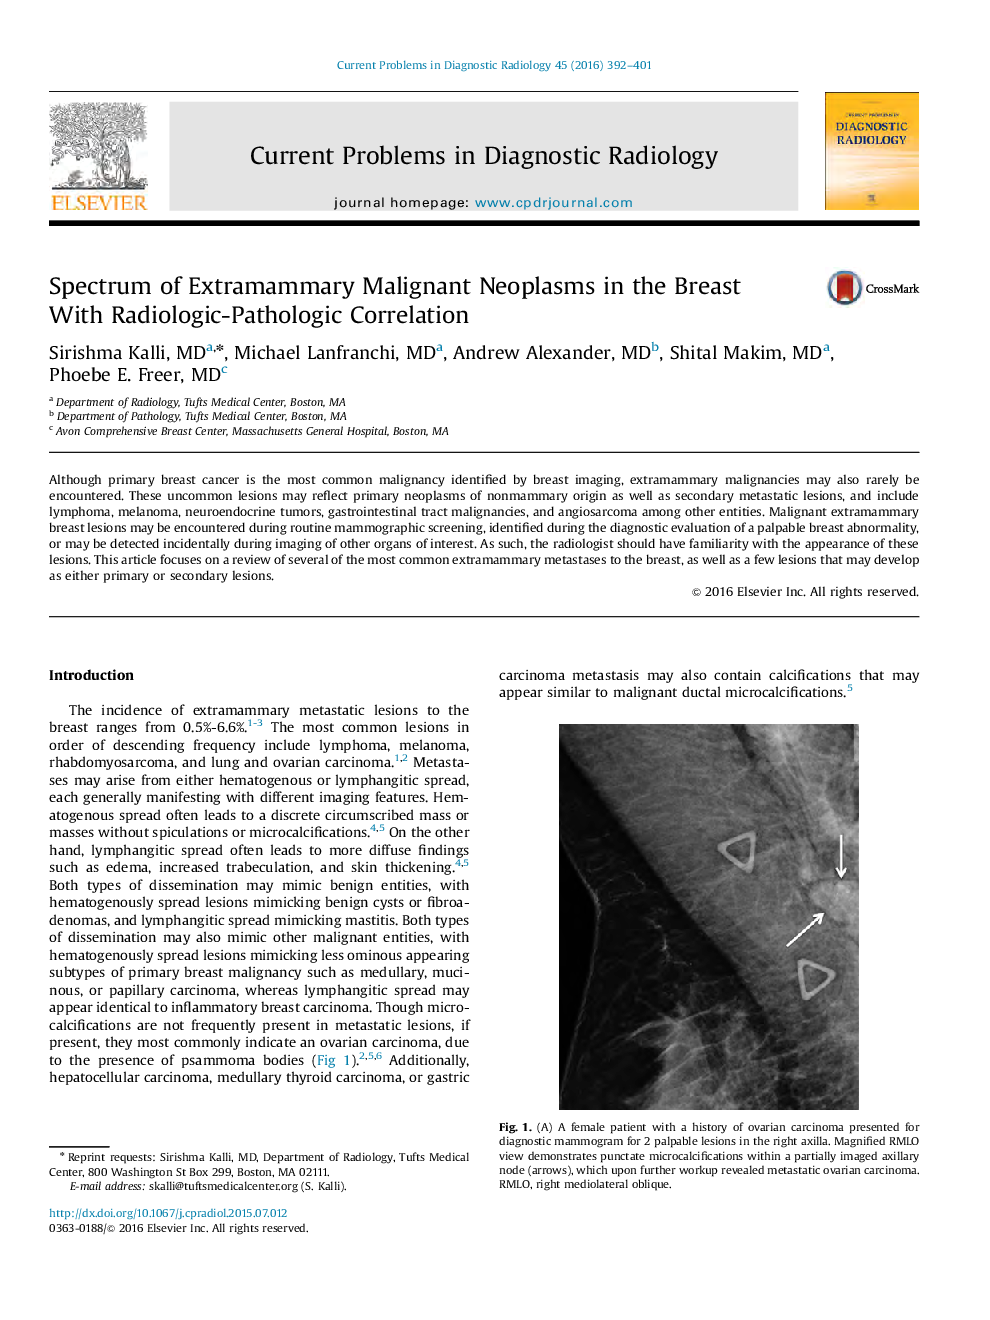 Spectrum of Extramammary Malignant Neoplasms in the Breast With Radiologic-Pathologic Correlation